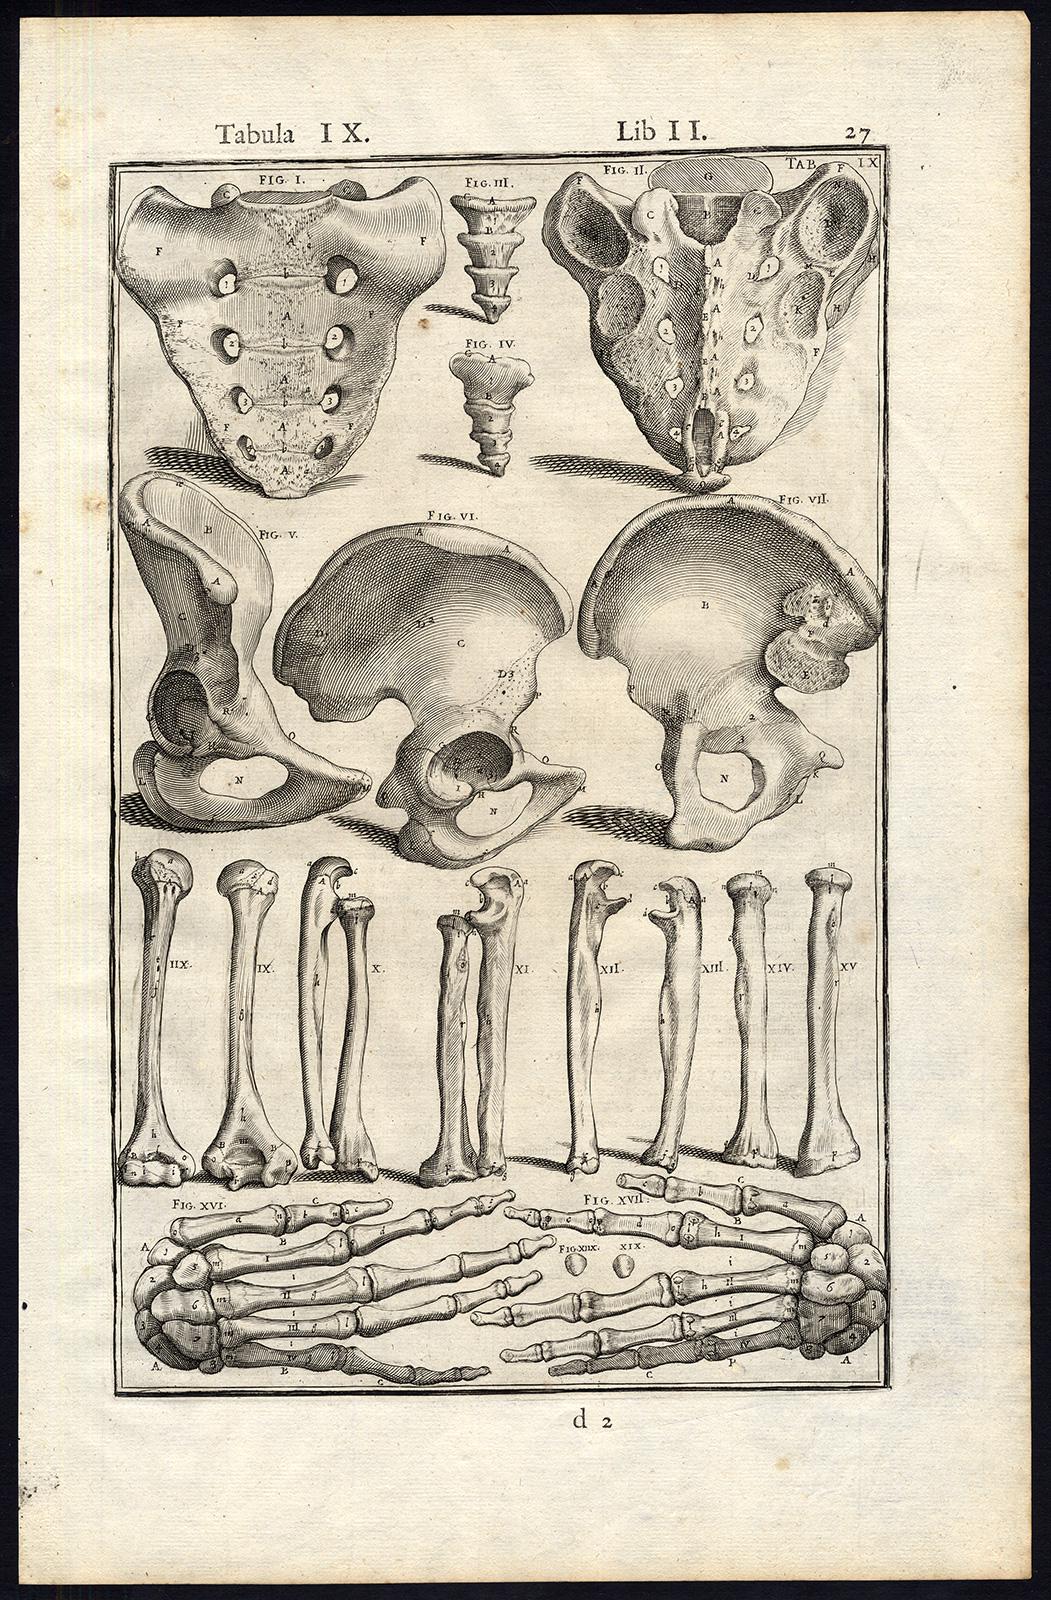 Anatomical print - bones of hands, arms, etc - by Spigelius - Engraving - 17th c - Print by Adrianus Spigelius